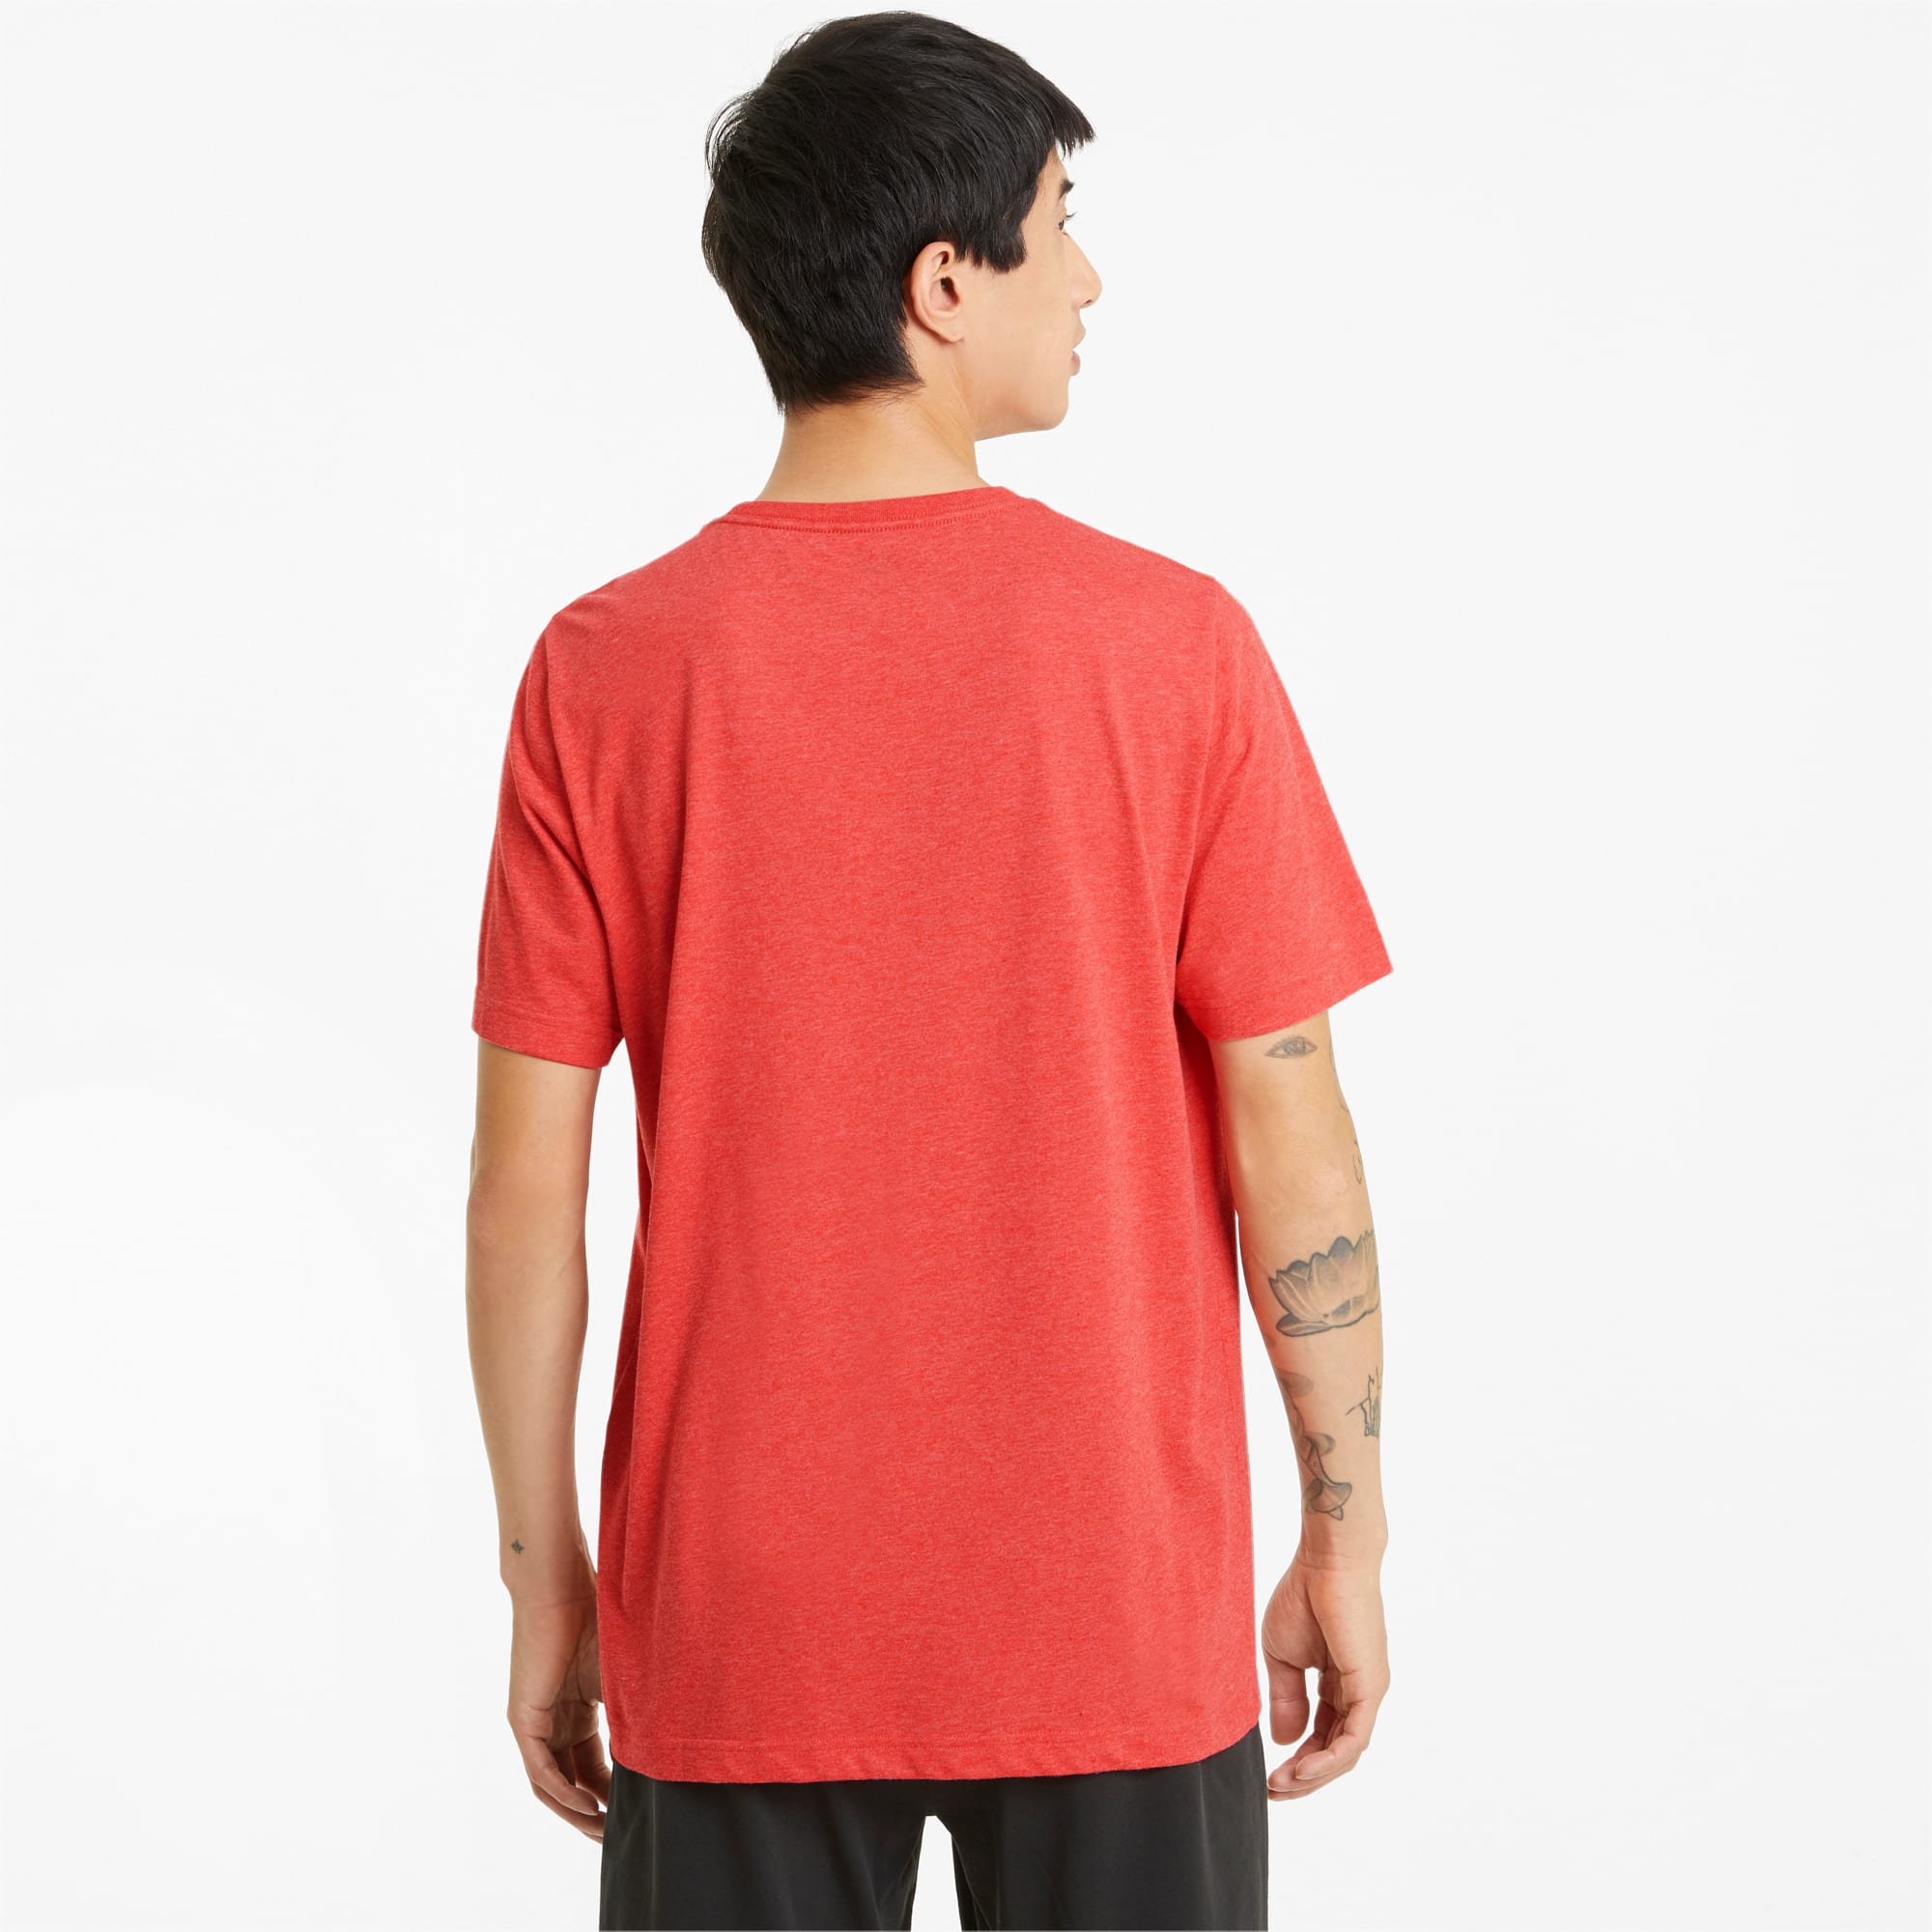 PUMA Essentials Heather Men's T-Shirt, High Risk Red, Size XXL, Clothing